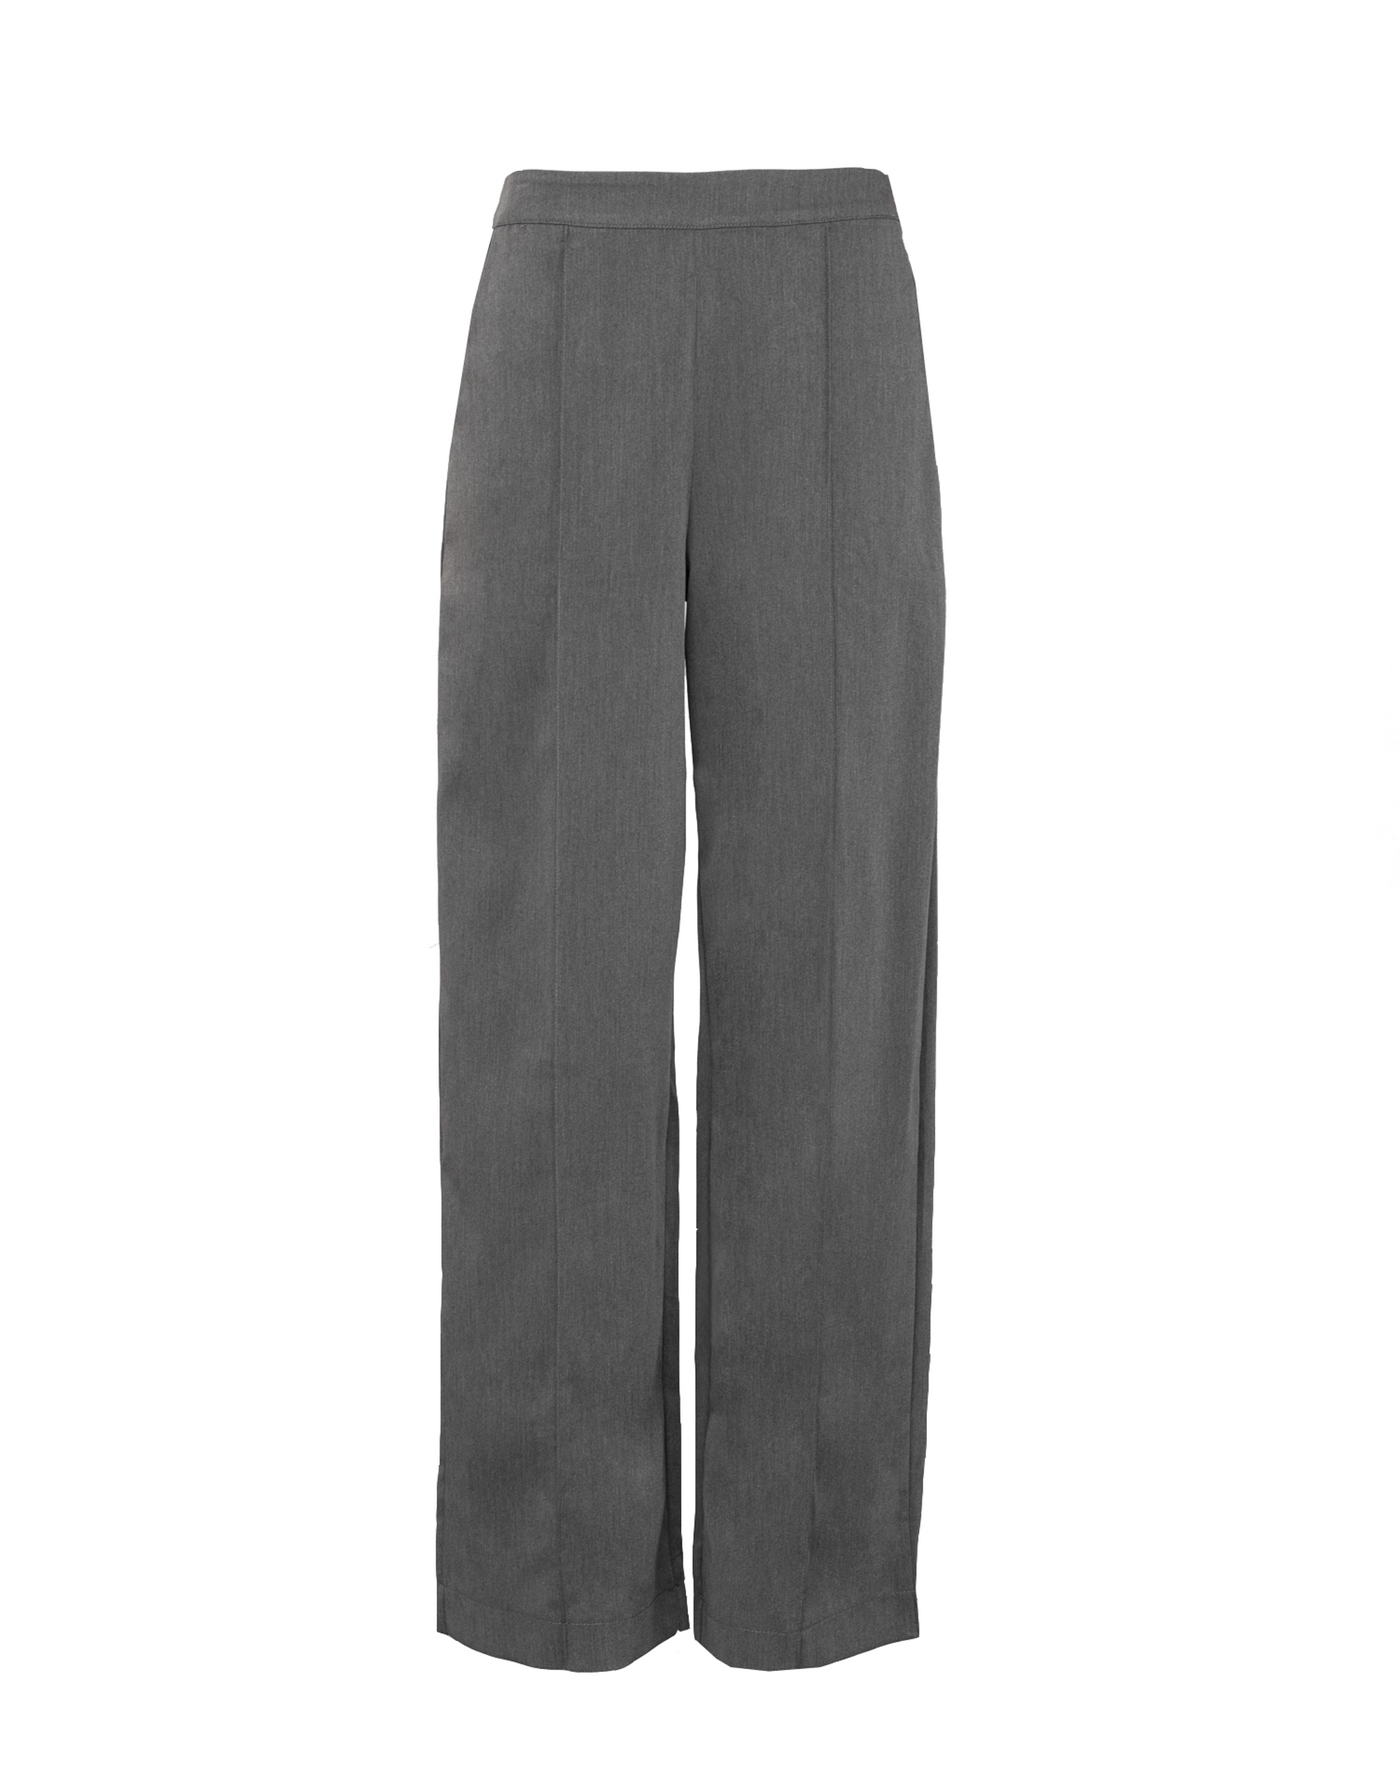 Cartea Pants (Grey) - Wide Leg Pants - Women's Pant - Charcoal Clothing